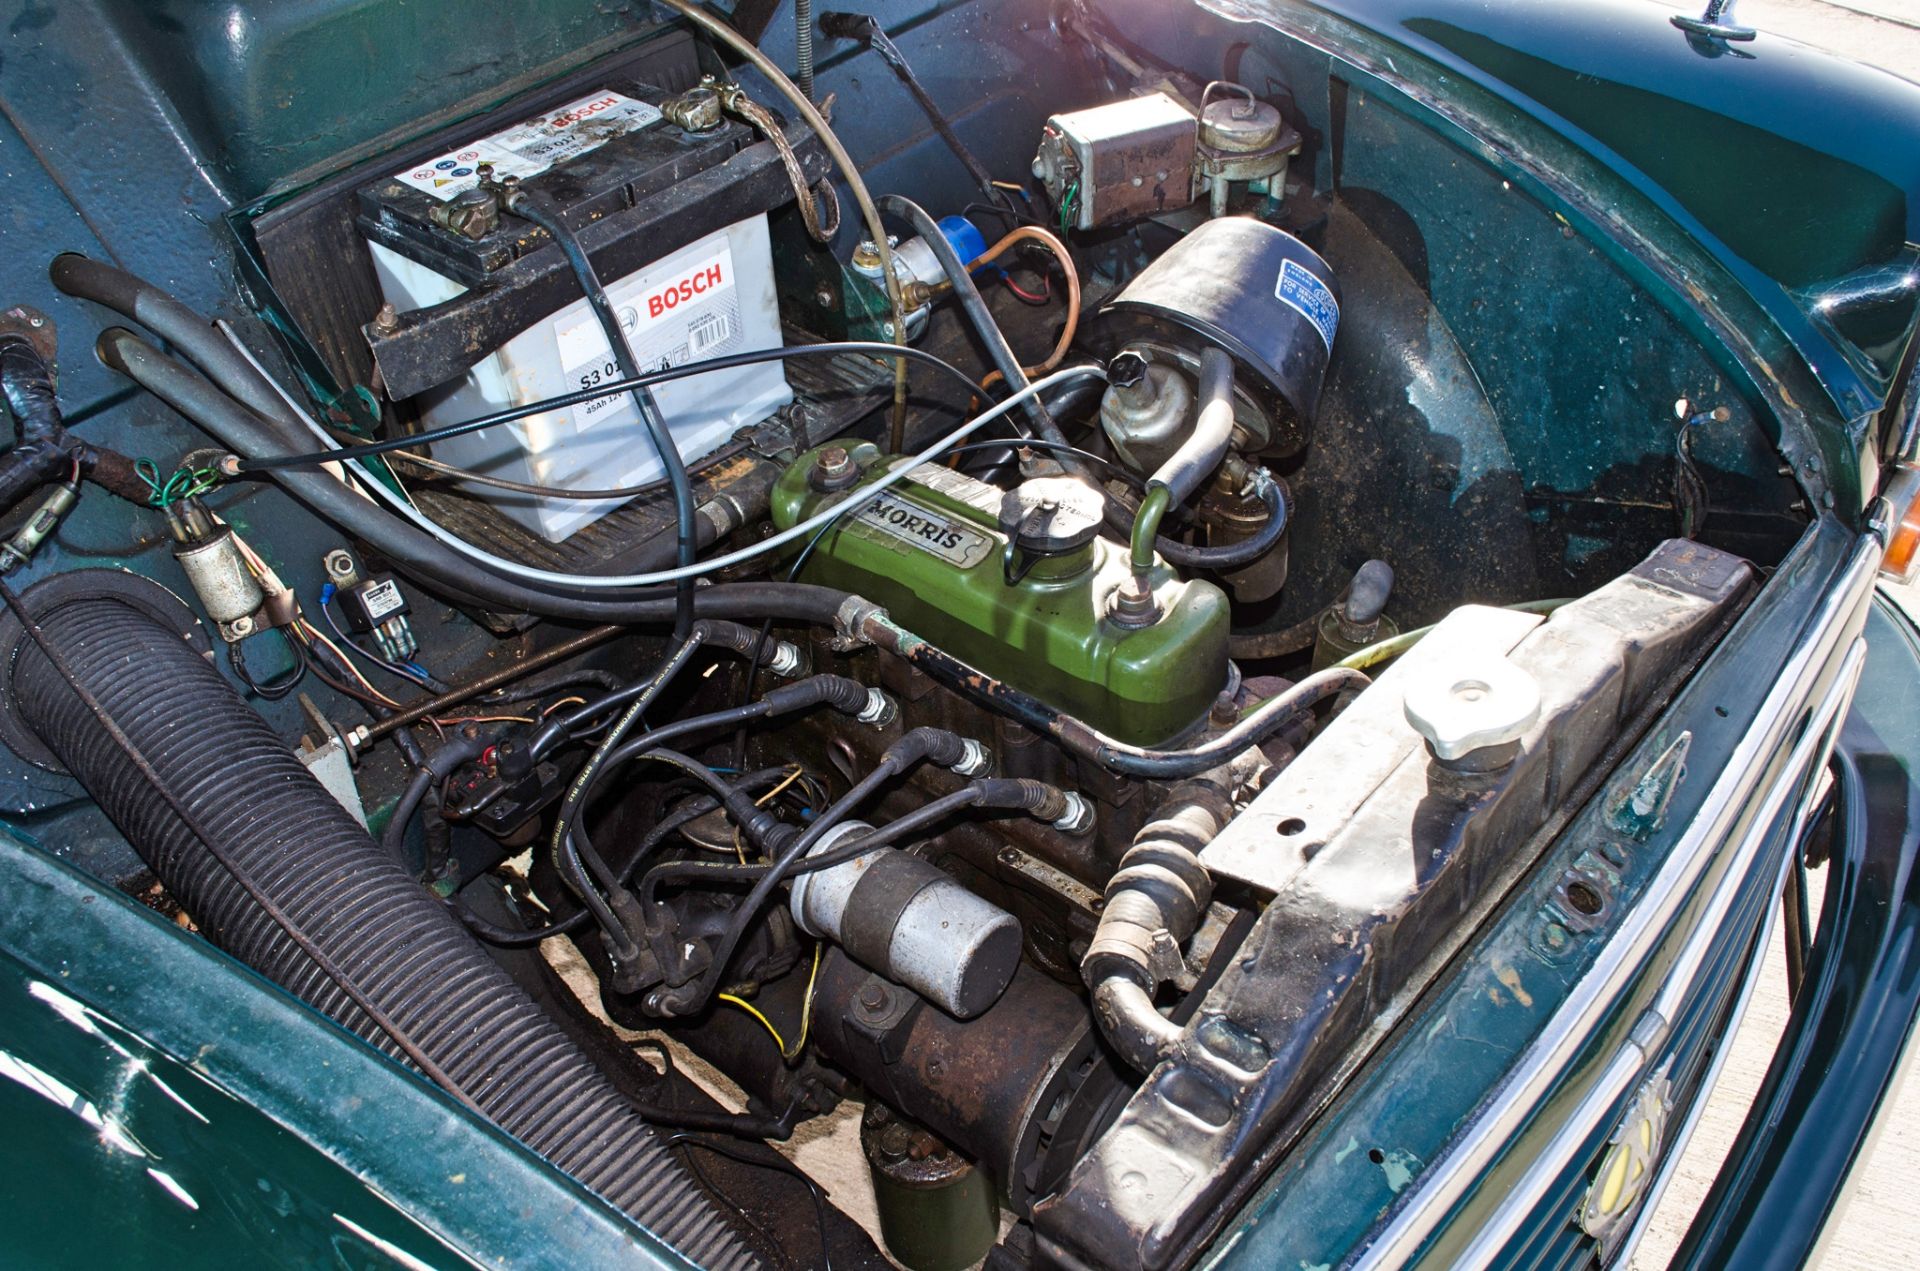 1968 Morris Minor 1000 1098cc series V 2 door convertible - Image 48 of 58